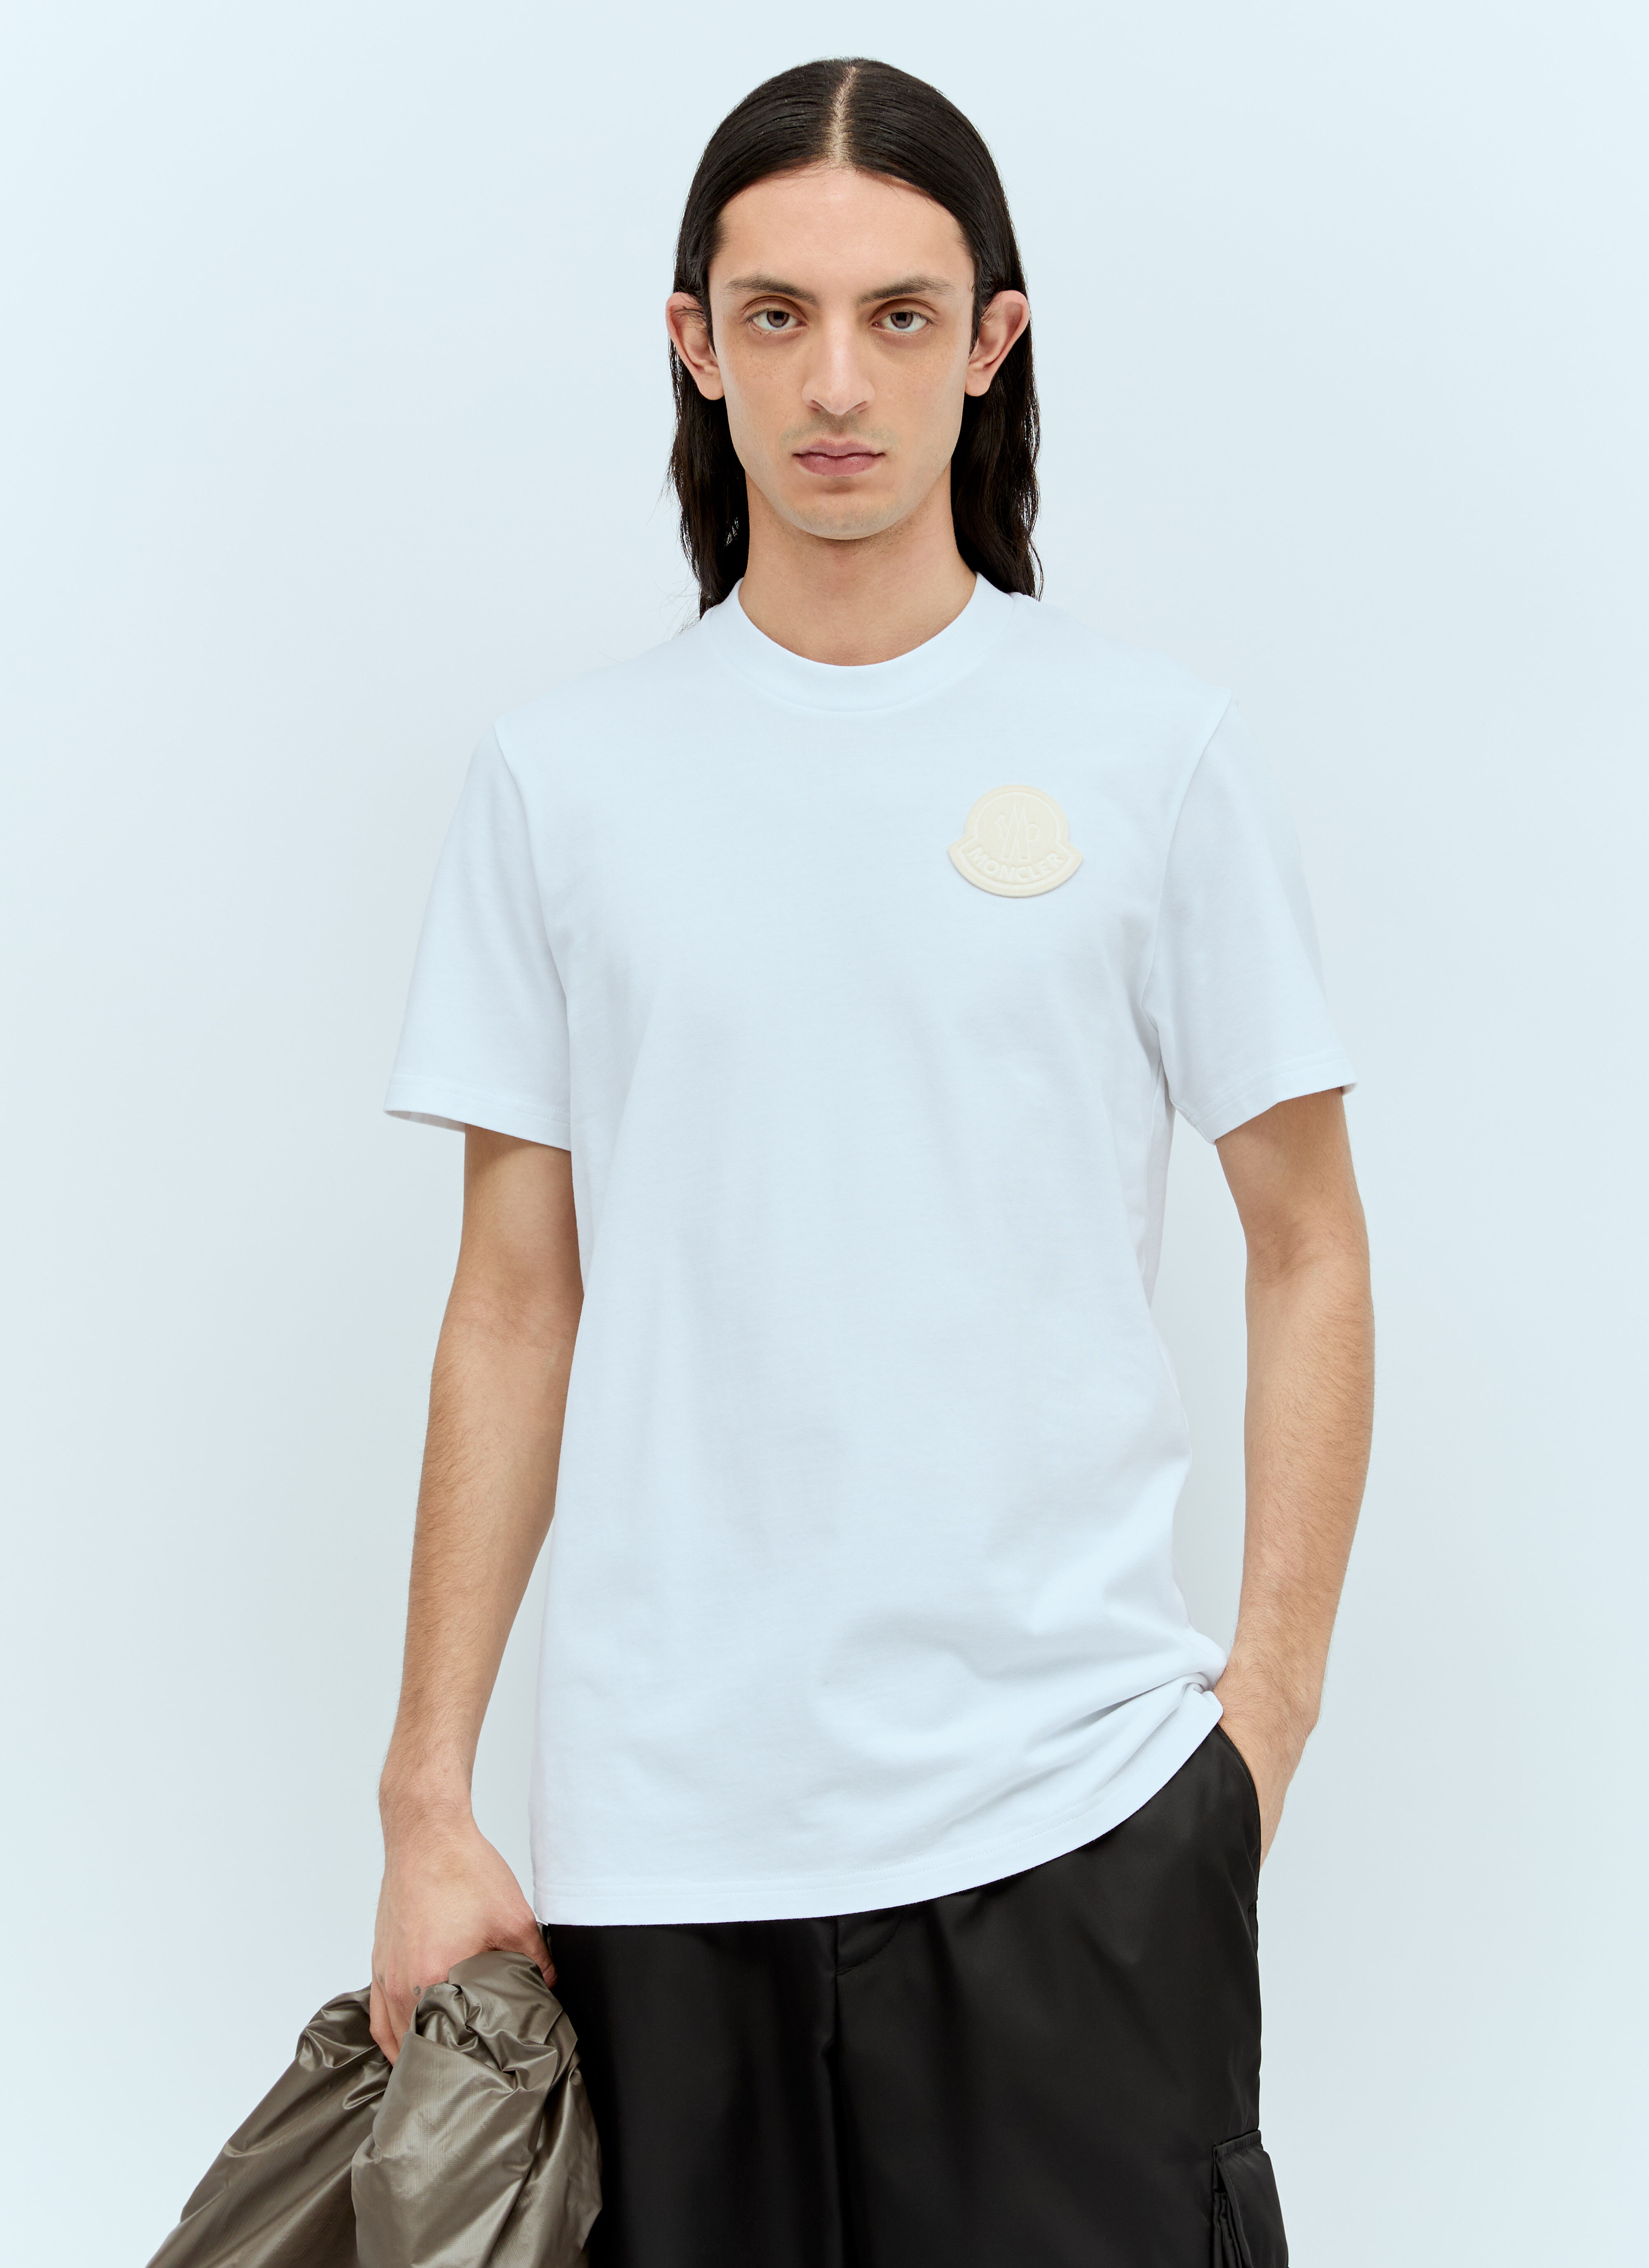 Moncler ロゴパッチTシャツ ネイビー mon0156011